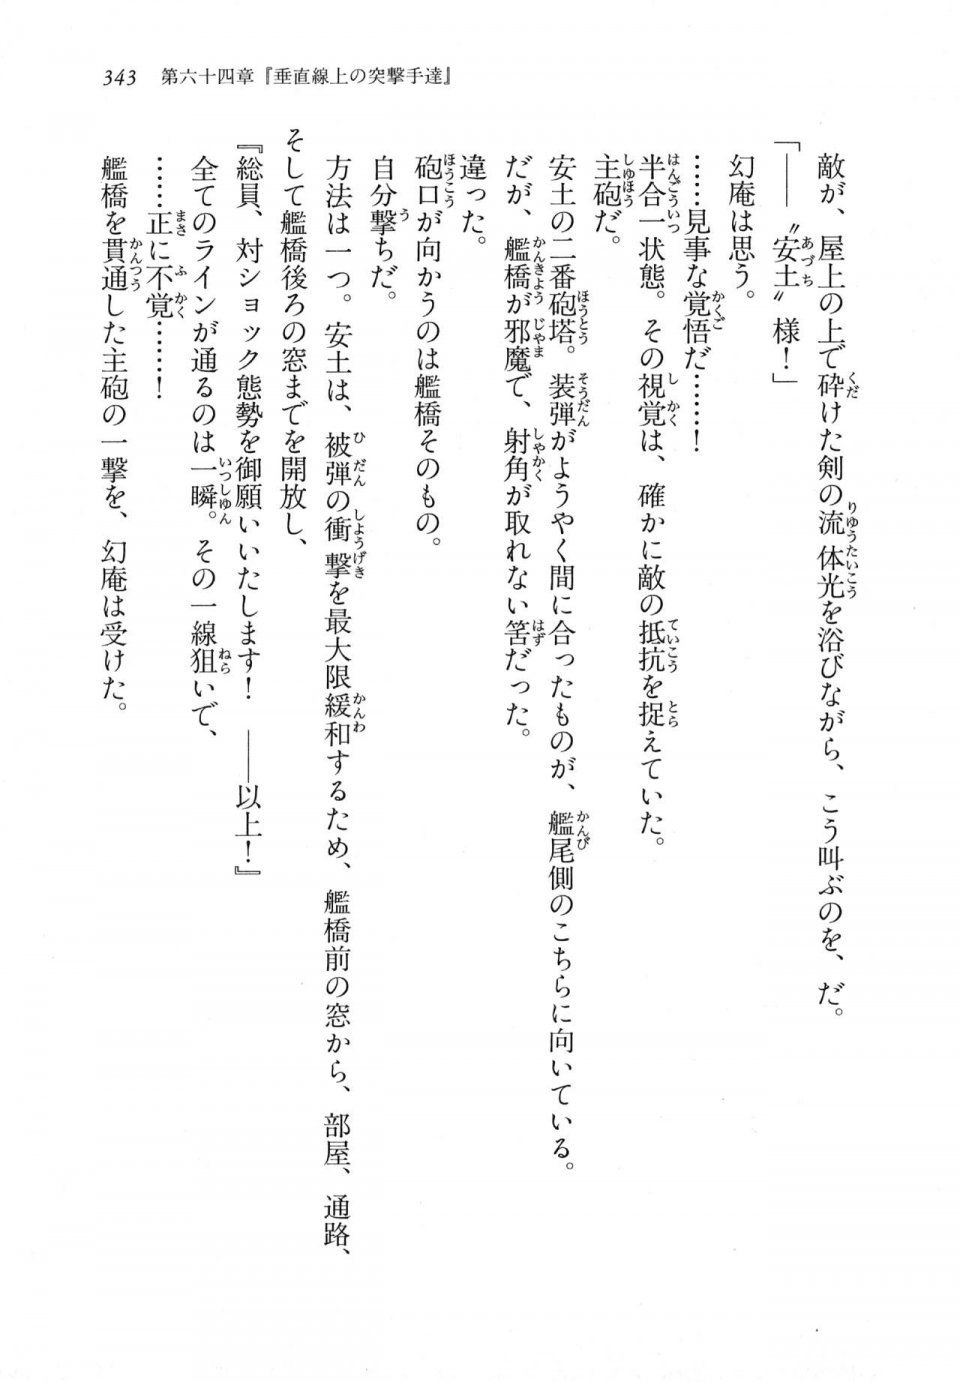 Kyoukai Senjou no Horizon LN Vol 18(7C) Part 1 - Photo #343